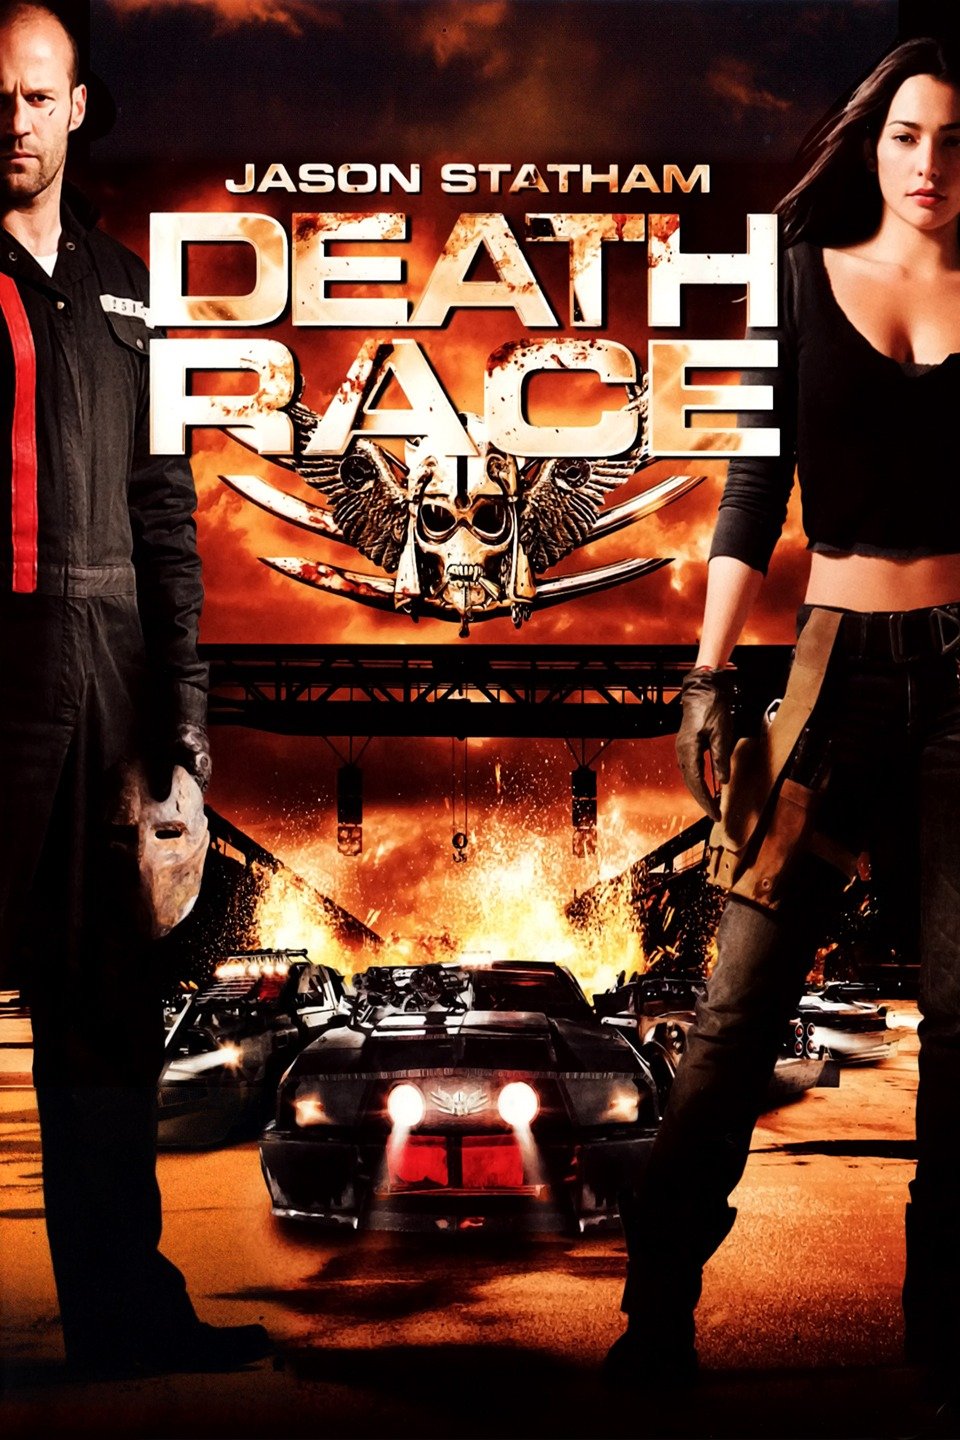 [MINI-HD] Death Race (2008) ซิ่ง สั่ง ตาย [1080p] [พากย์ไทย DTS + อังกฤษ DTS] [บรรยายไทย + อังกฤษ] [เสียงไทย + ซับไทย] [ONE2UP]